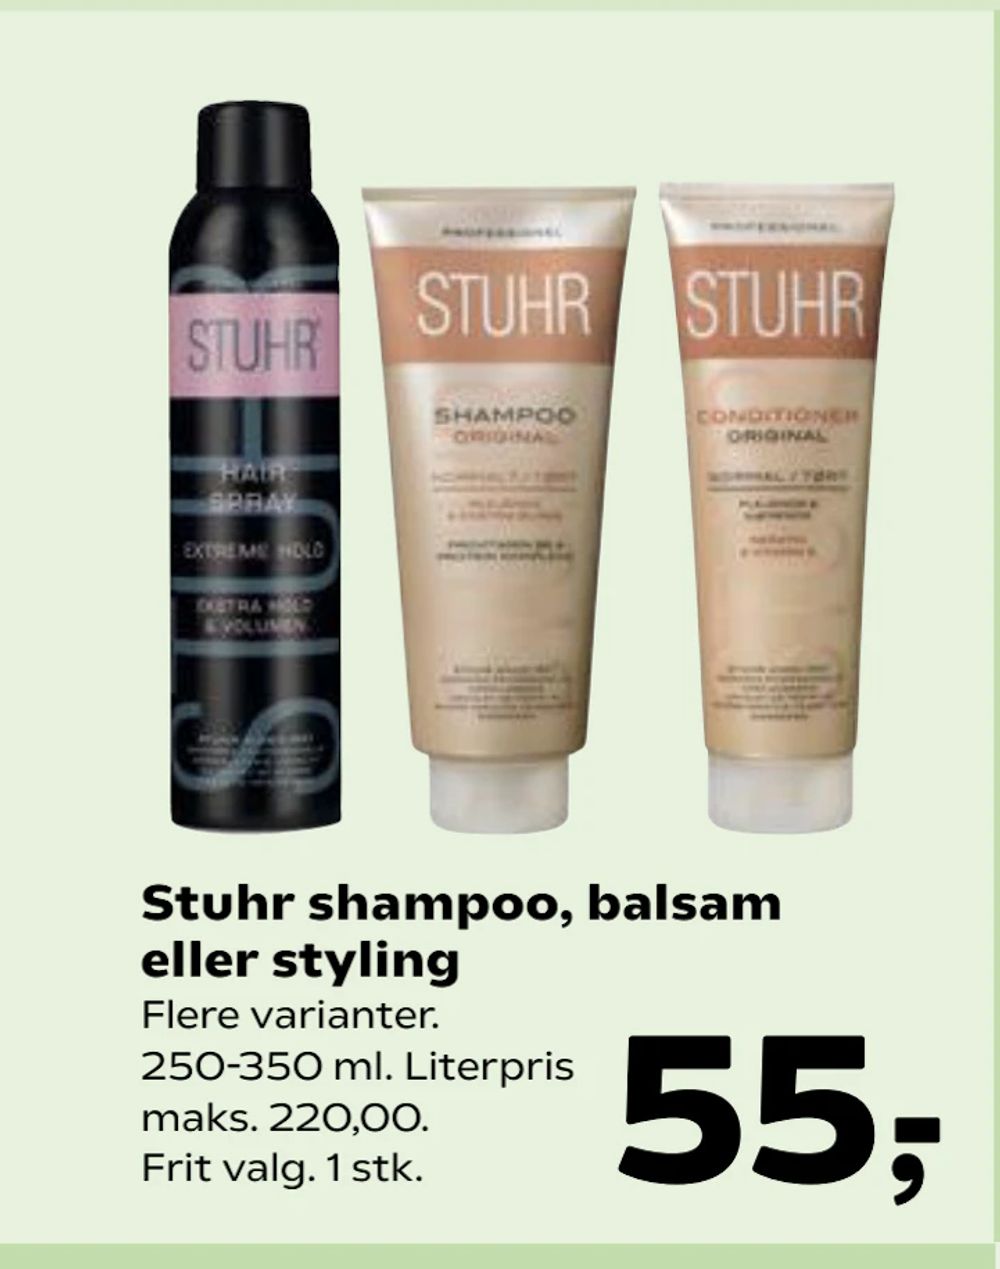 Tilbud på Stuhr shampoo, balsam eller styling fra SuperBrugsen til 55 kr.